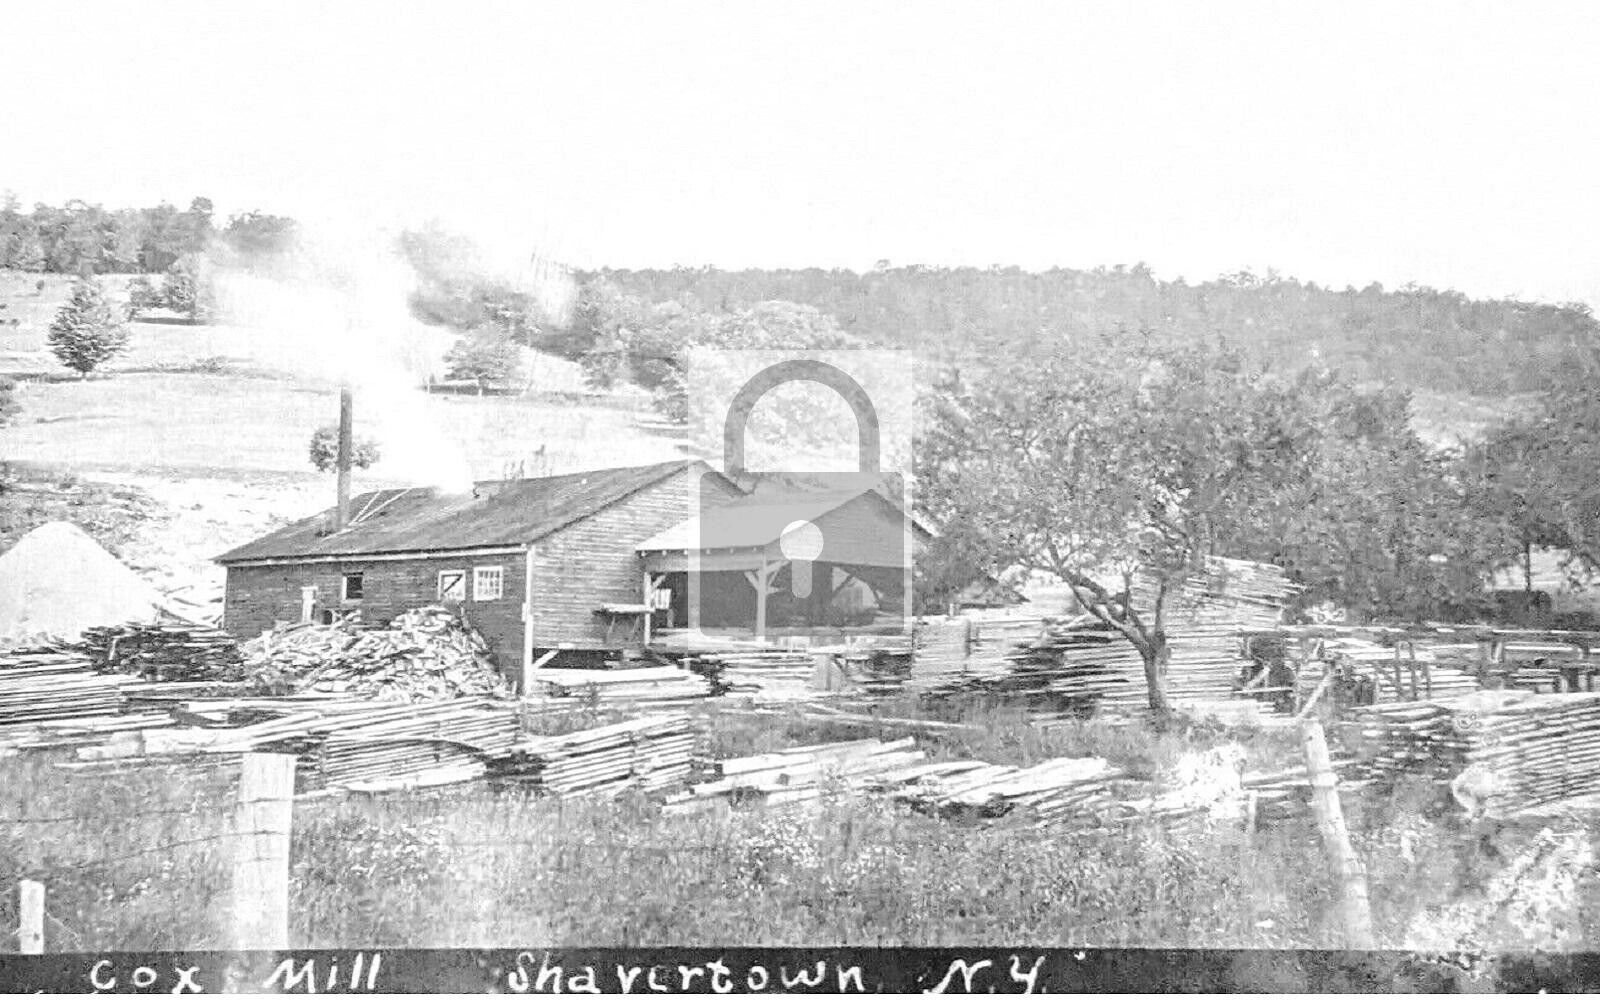 Cox Lumber Mill Shavertown New York NY Reprint Postcard